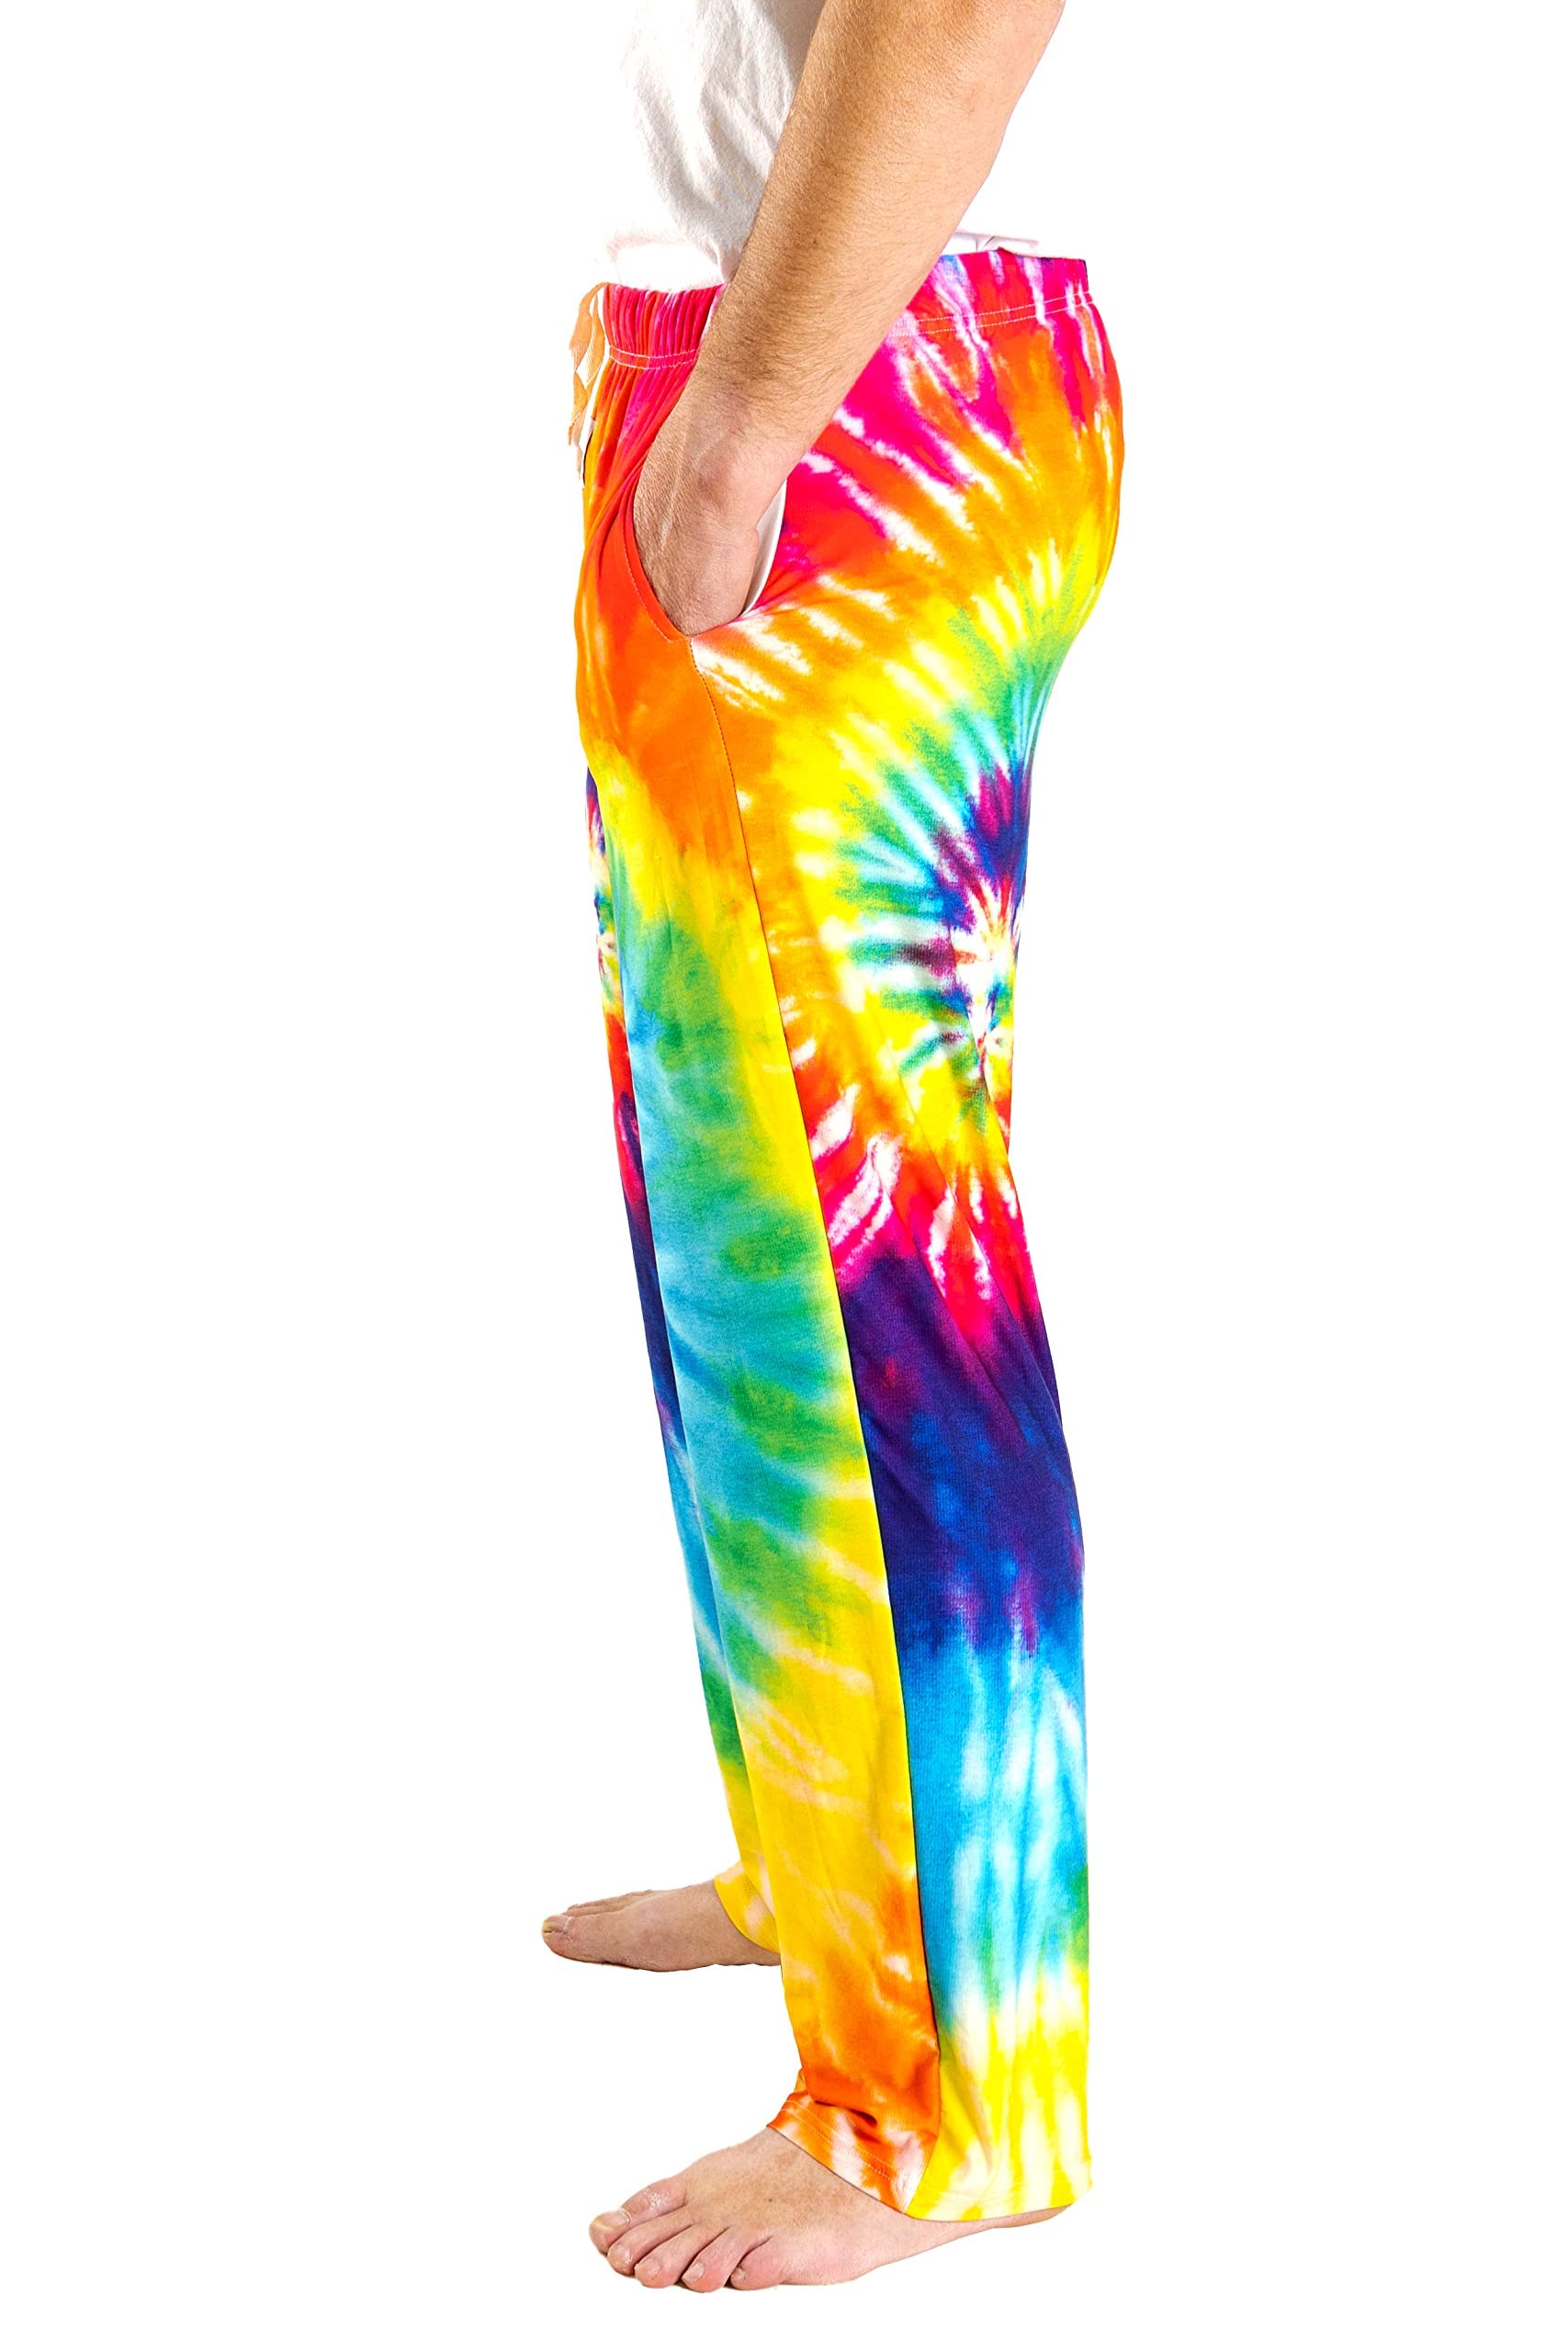 Waist down photo of model wearing Rainbow Tie-Dye pajama lounge pants full side view (white background)